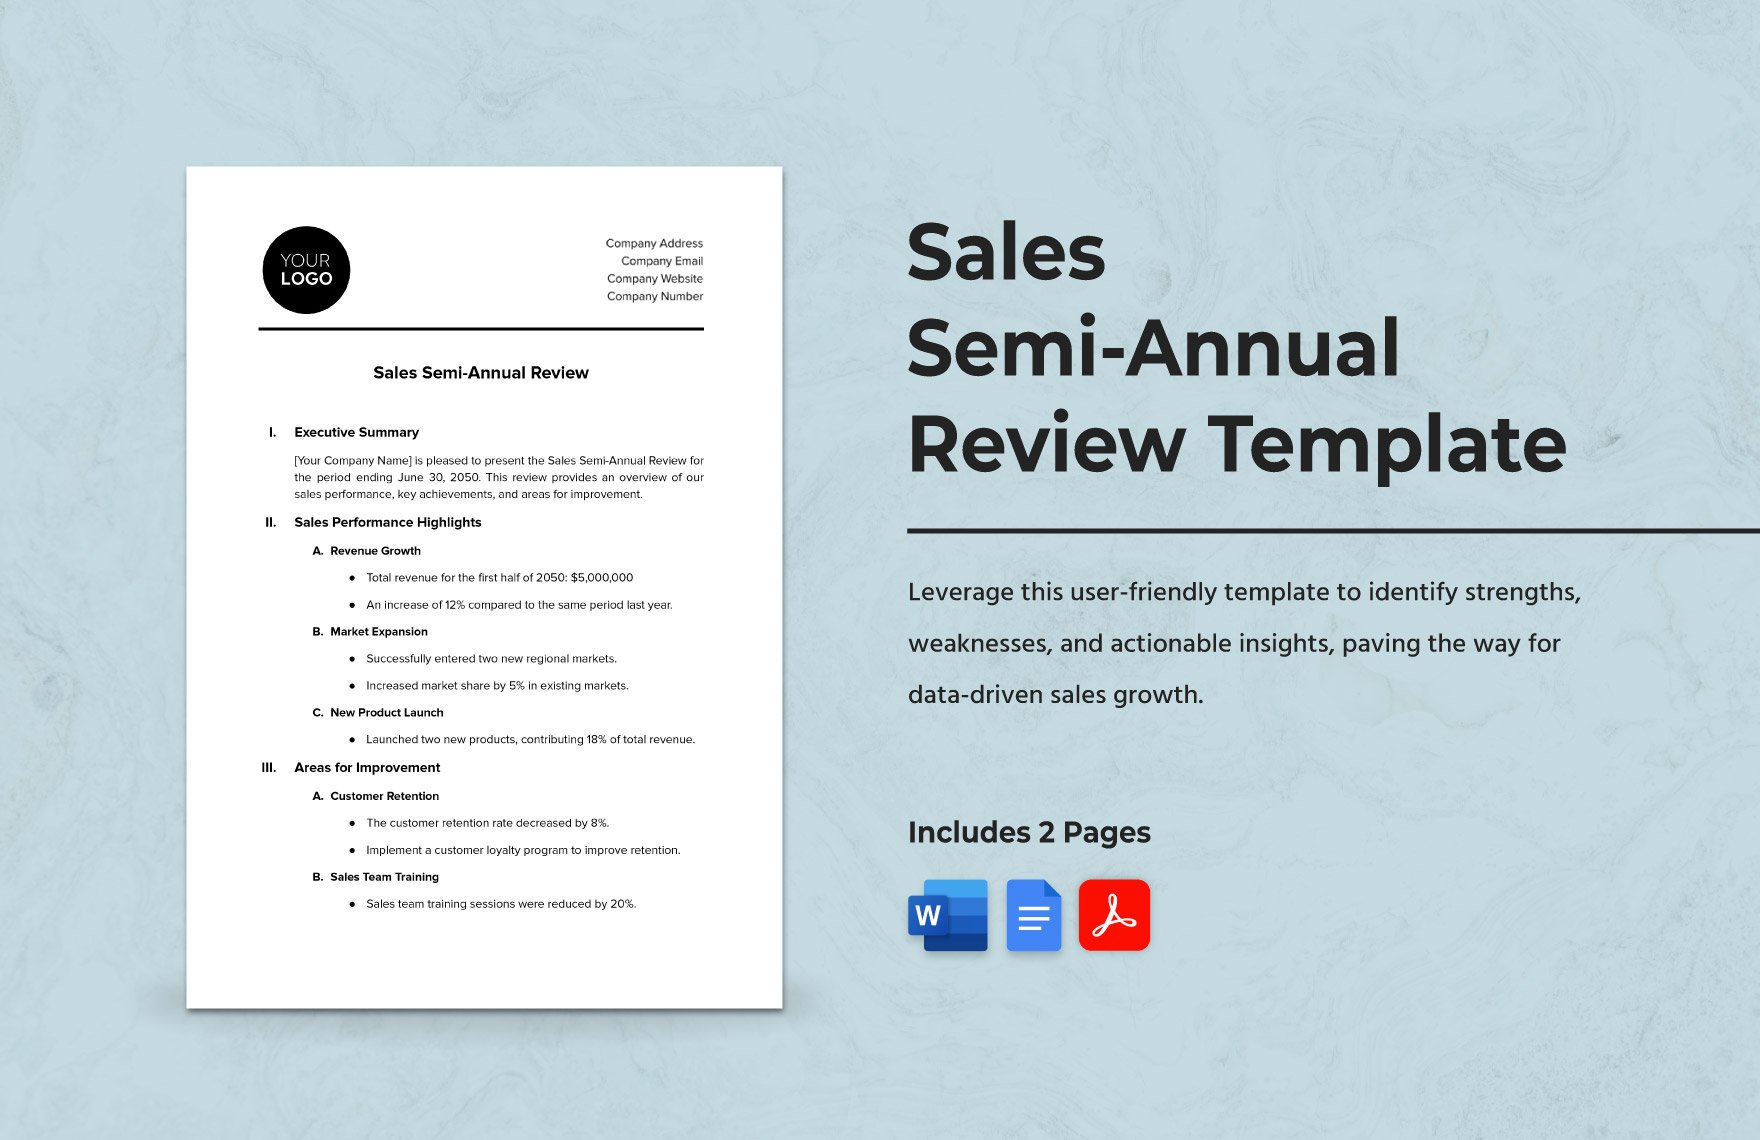 https://images.template.net/265512/sales-semi-annual-review-template-btgm1.jpg